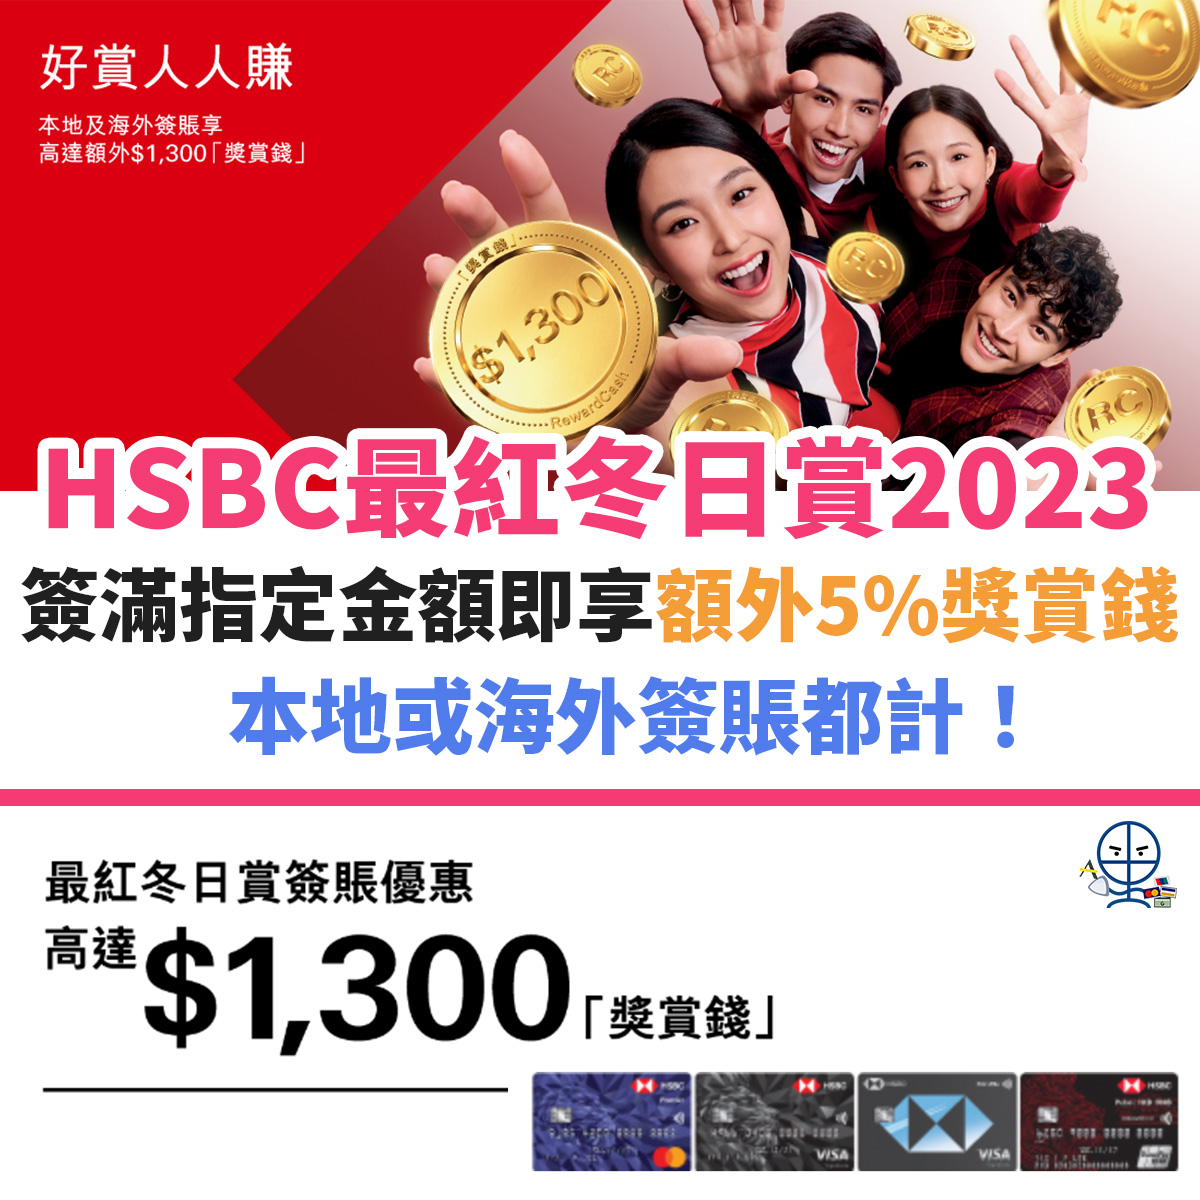 HSBC-最紅冬日賞-2023-滙豐-信用卡